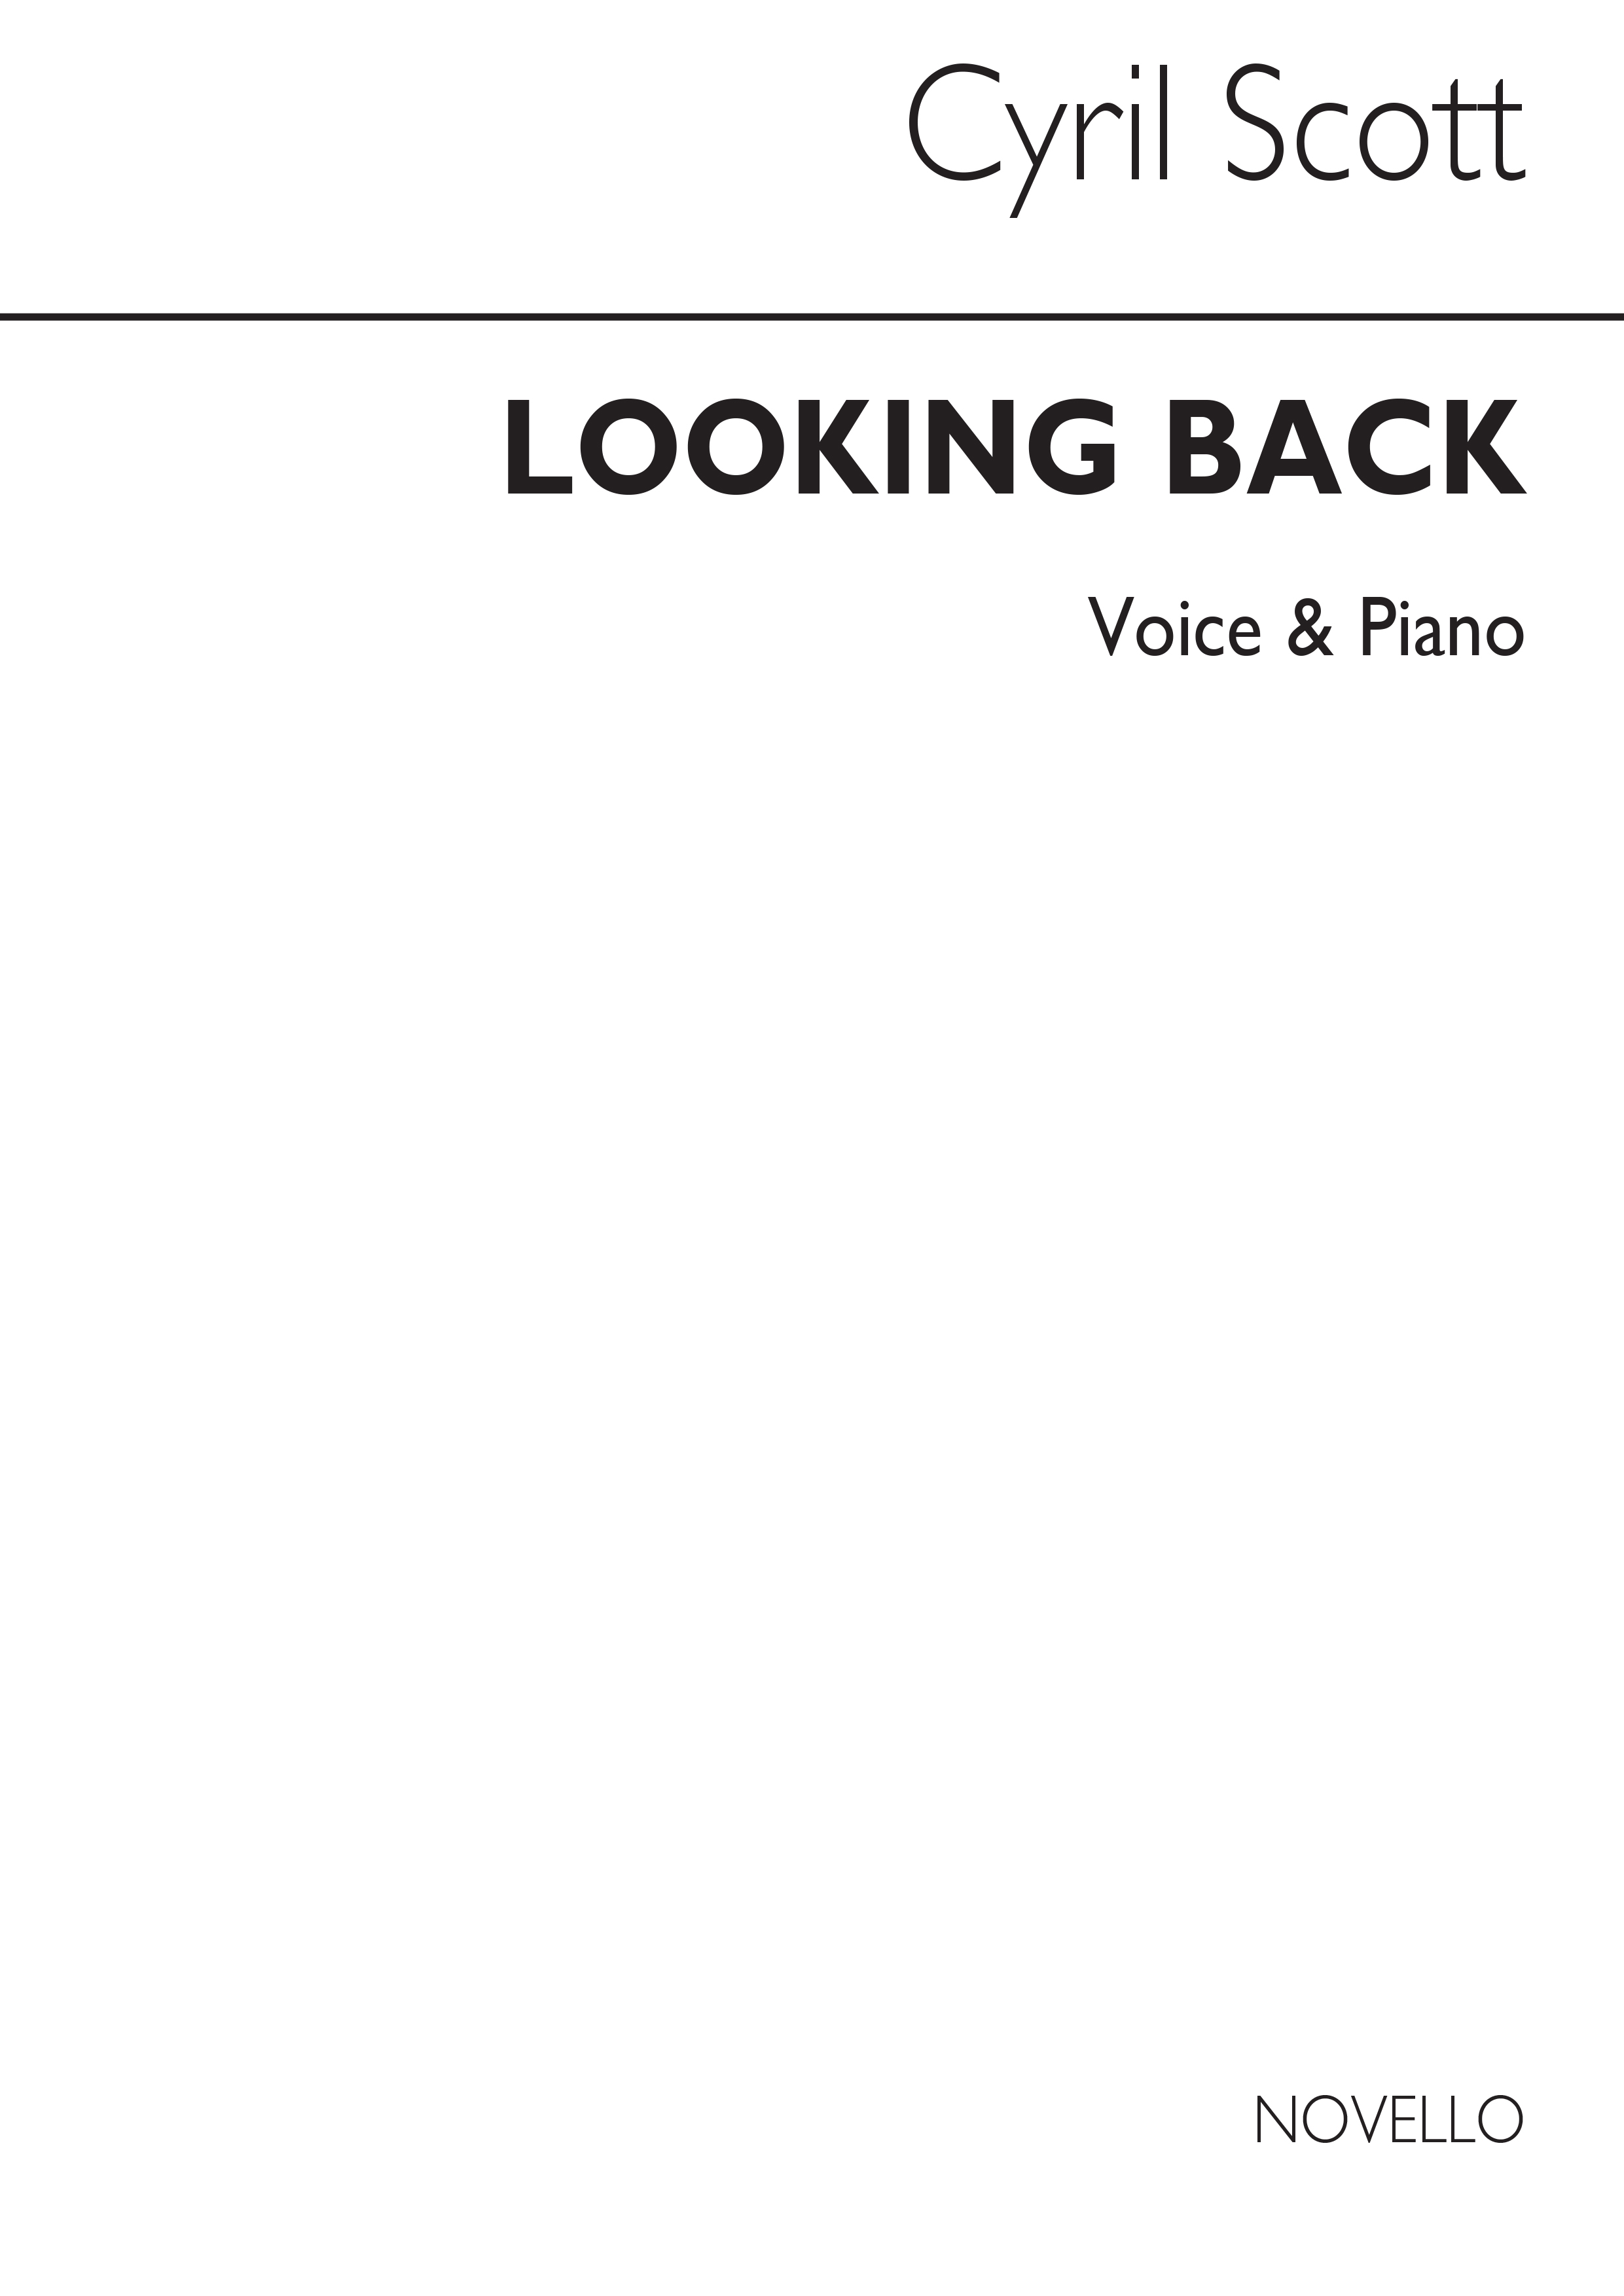 Cyril Scott: Looking Back-medium Voice/Piano (Key-e Flat)